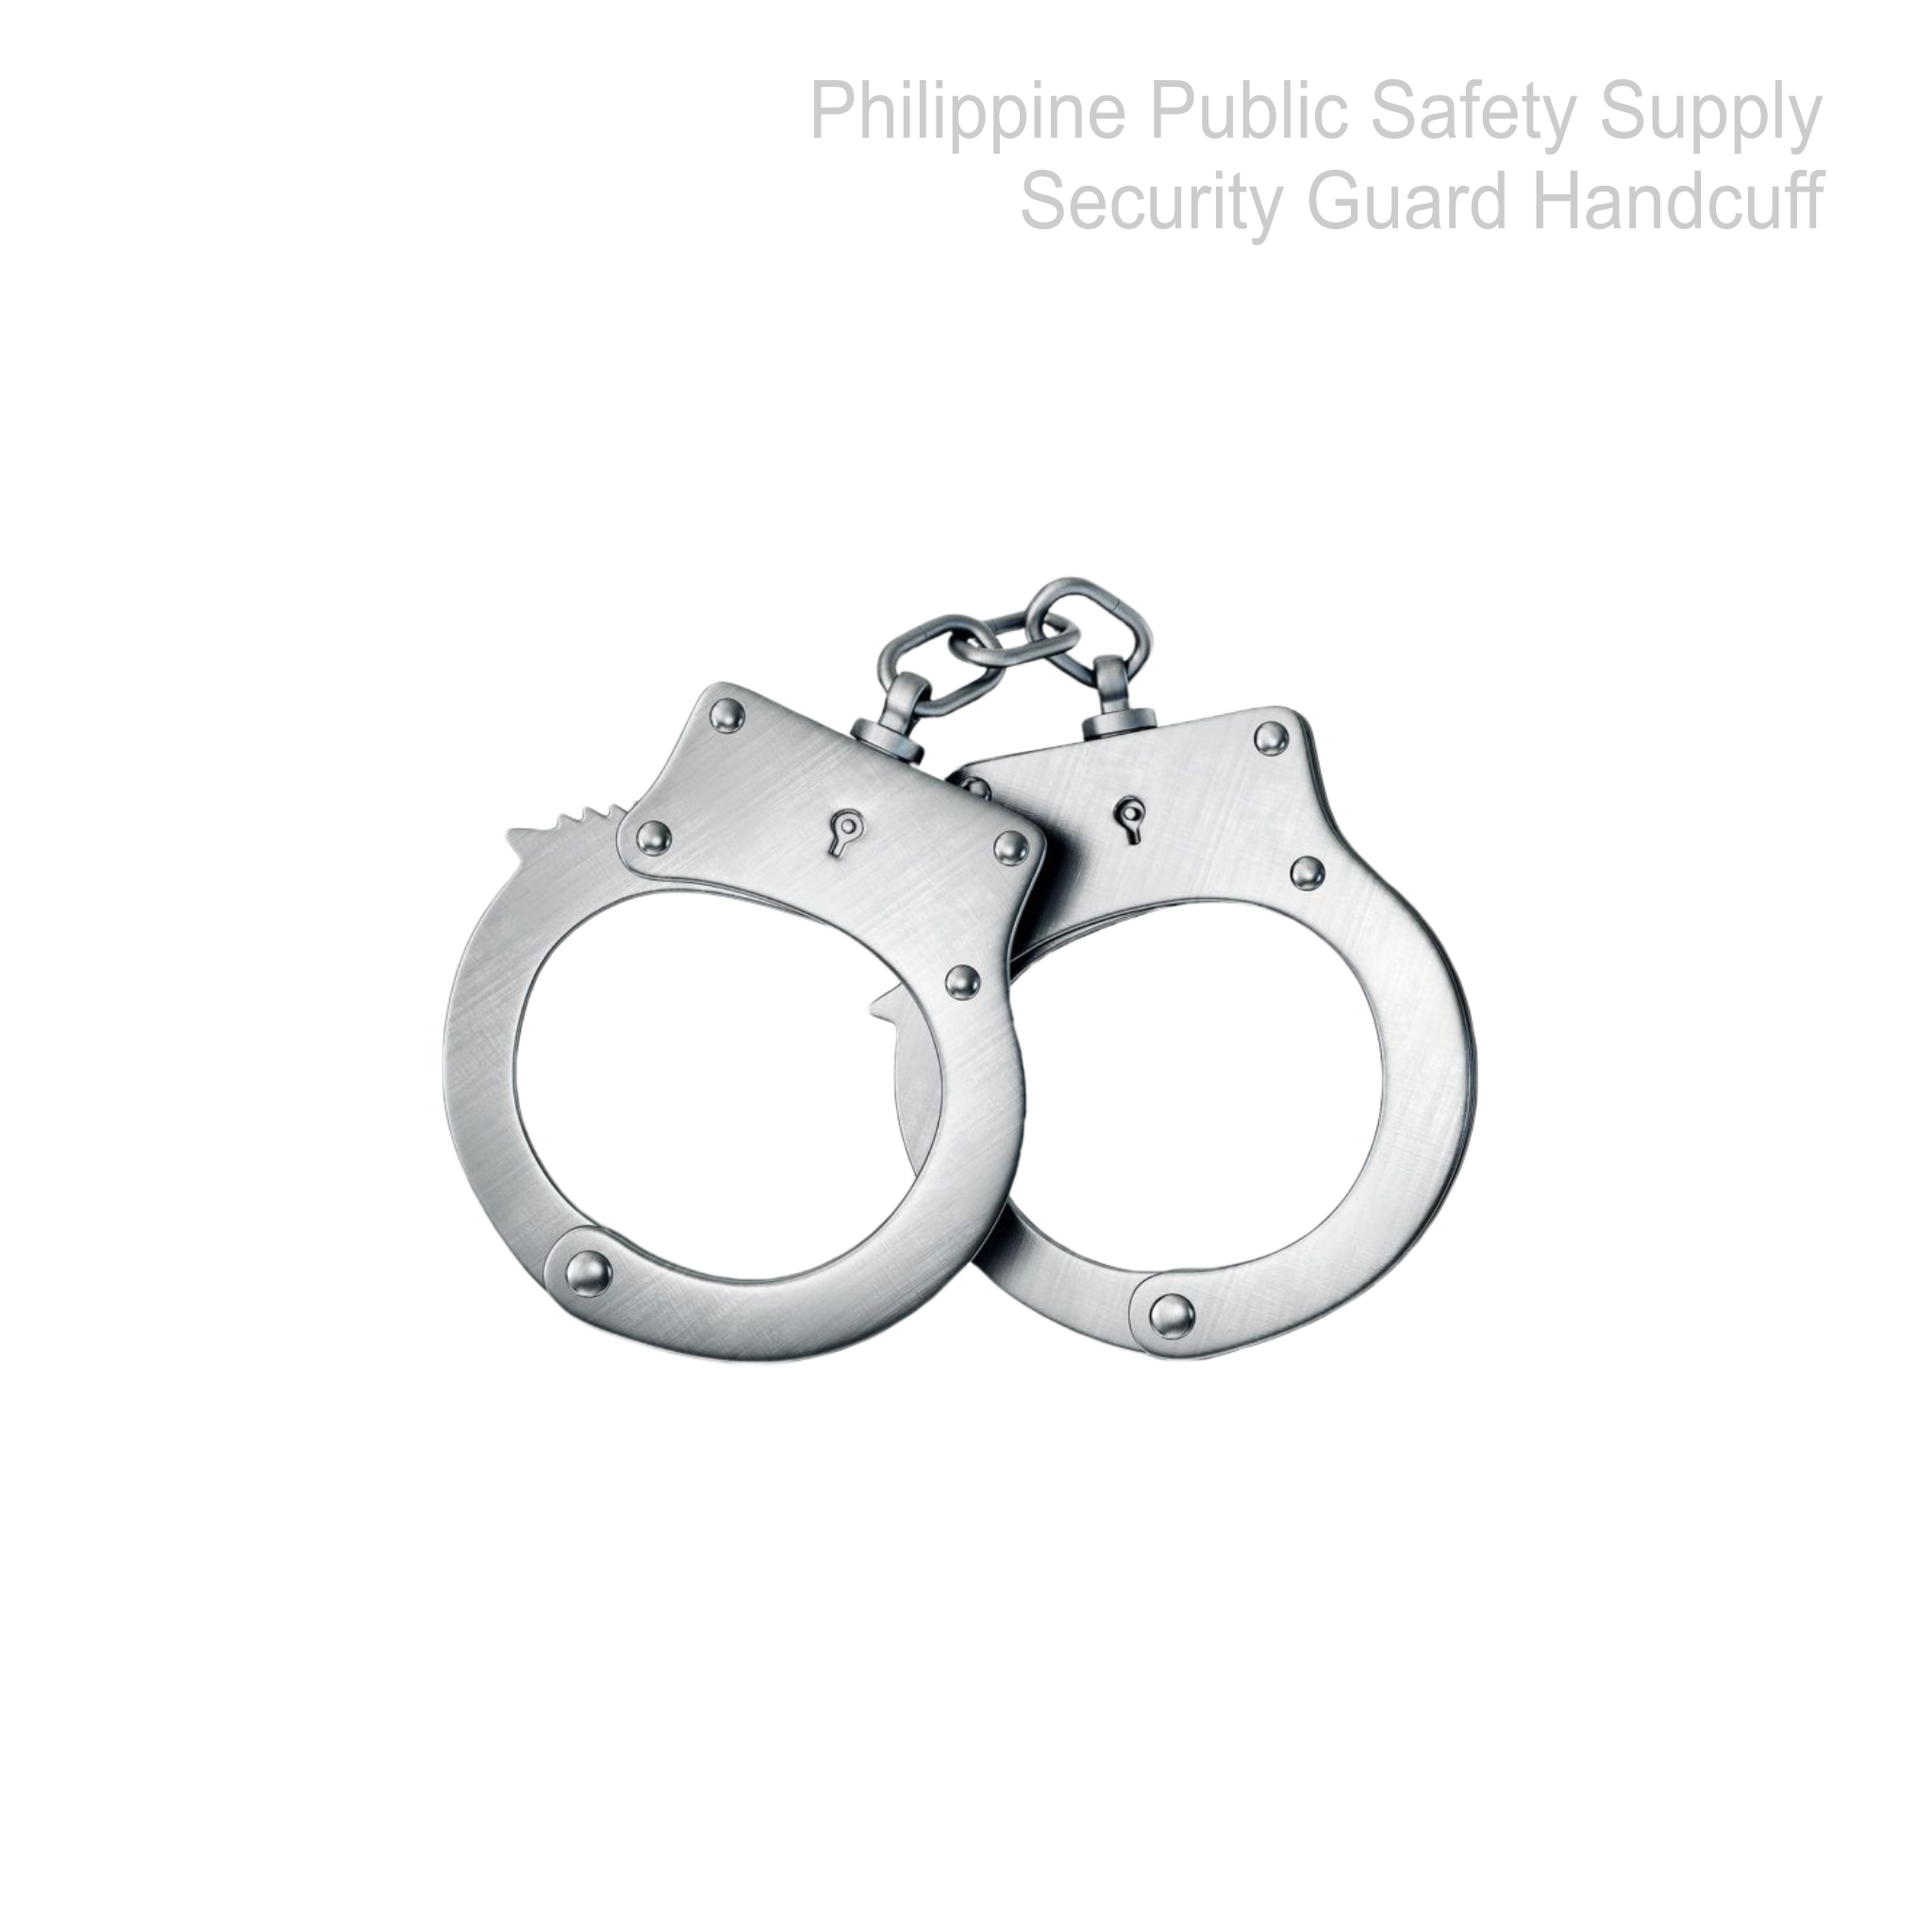 Security Guard Handcuff - PSA-SG